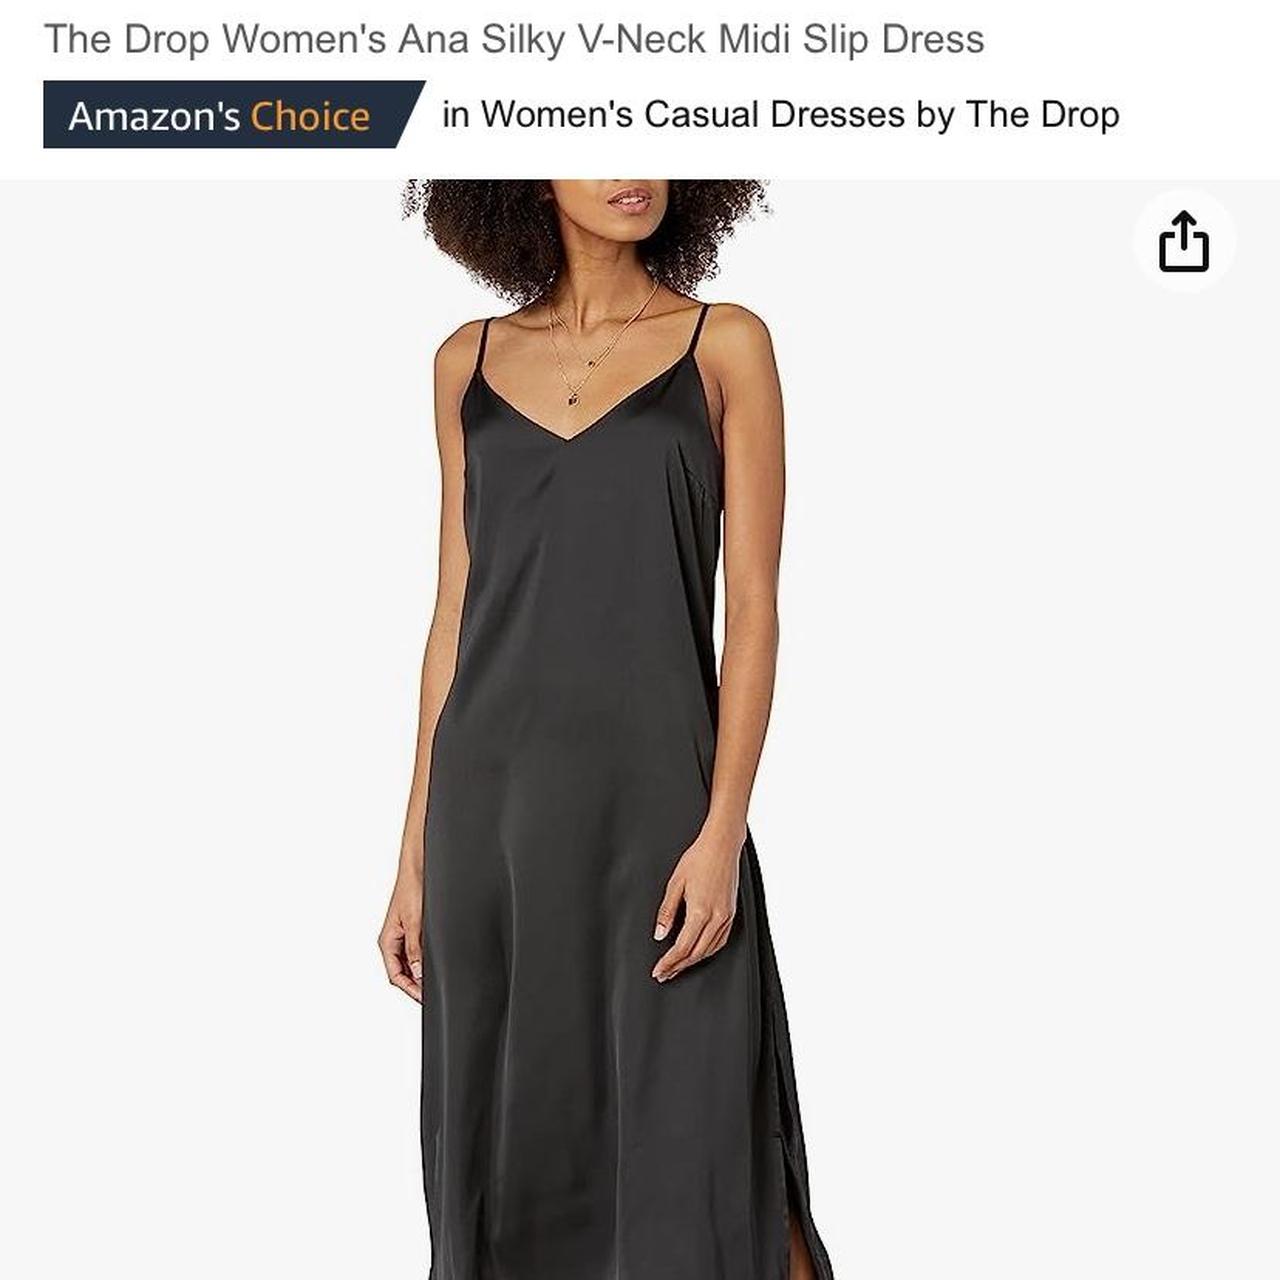  The Drop Women's Ana Silky V-Neck Midi Slip Dress